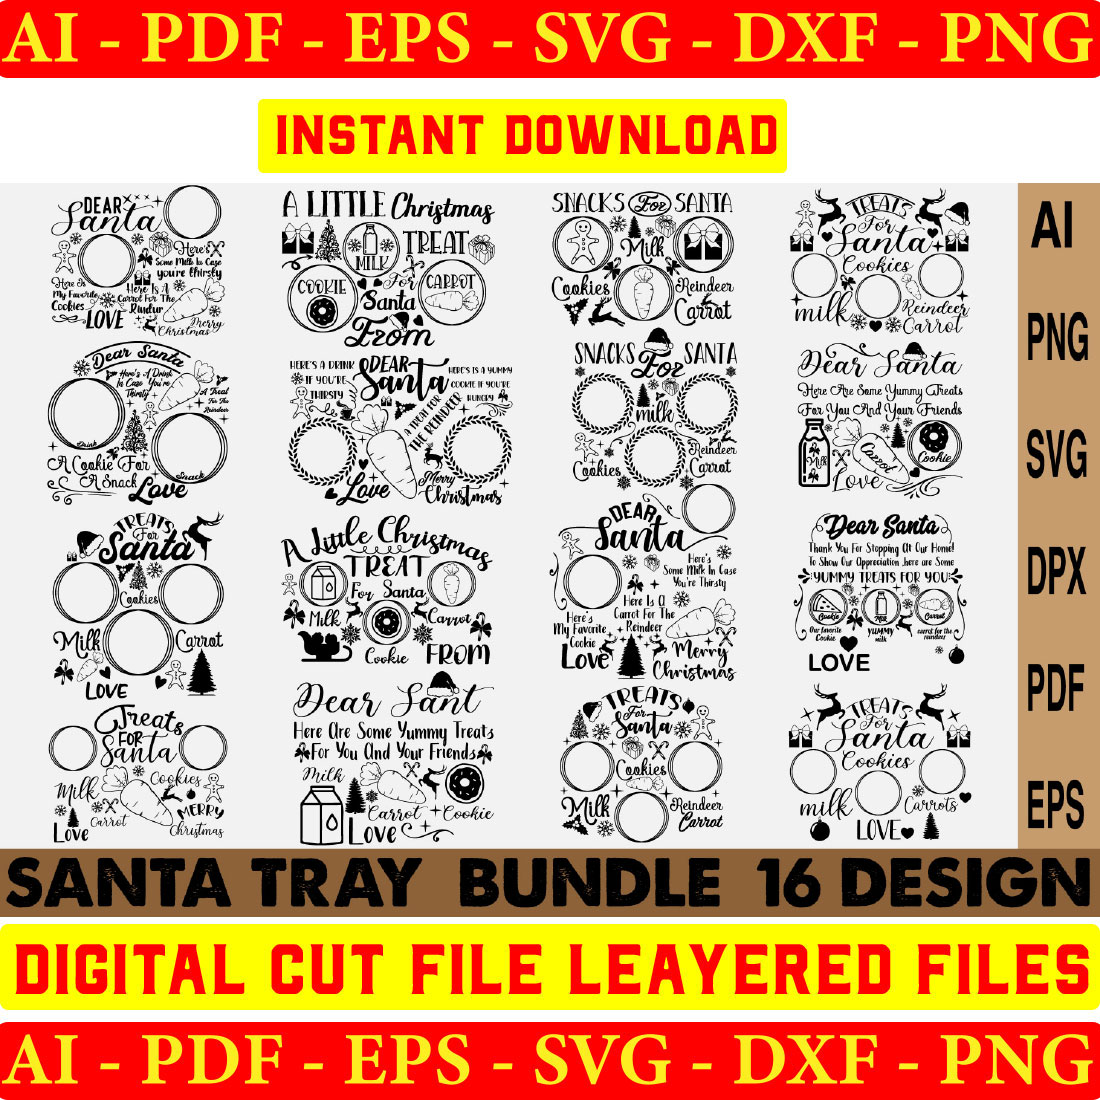 Christmas Santa Tray SVG Design Bundle cover image.